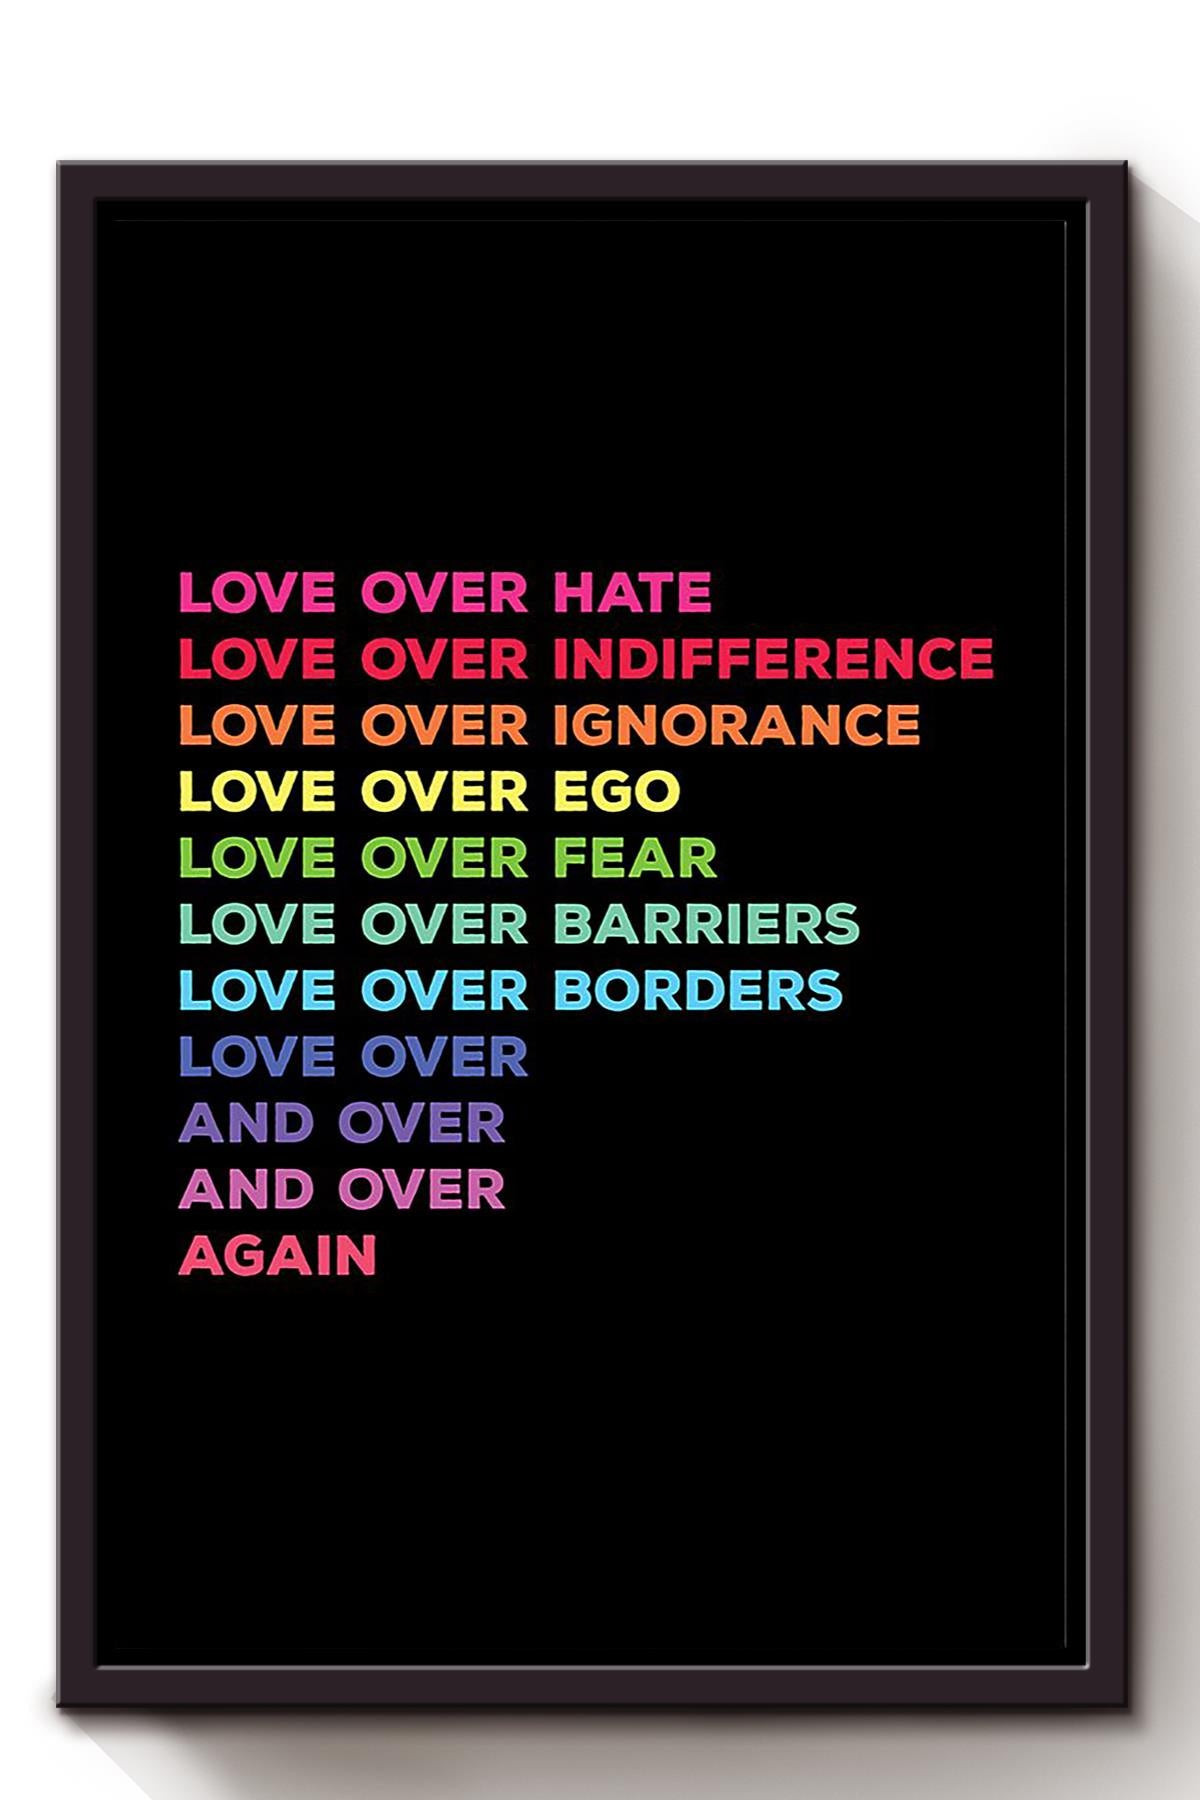 Love Over Everything Just Love Lovespoon Gift For All Gender Orientation Gender Identity Pride Month Framed Canvas Framed Matte Canvas 8x10